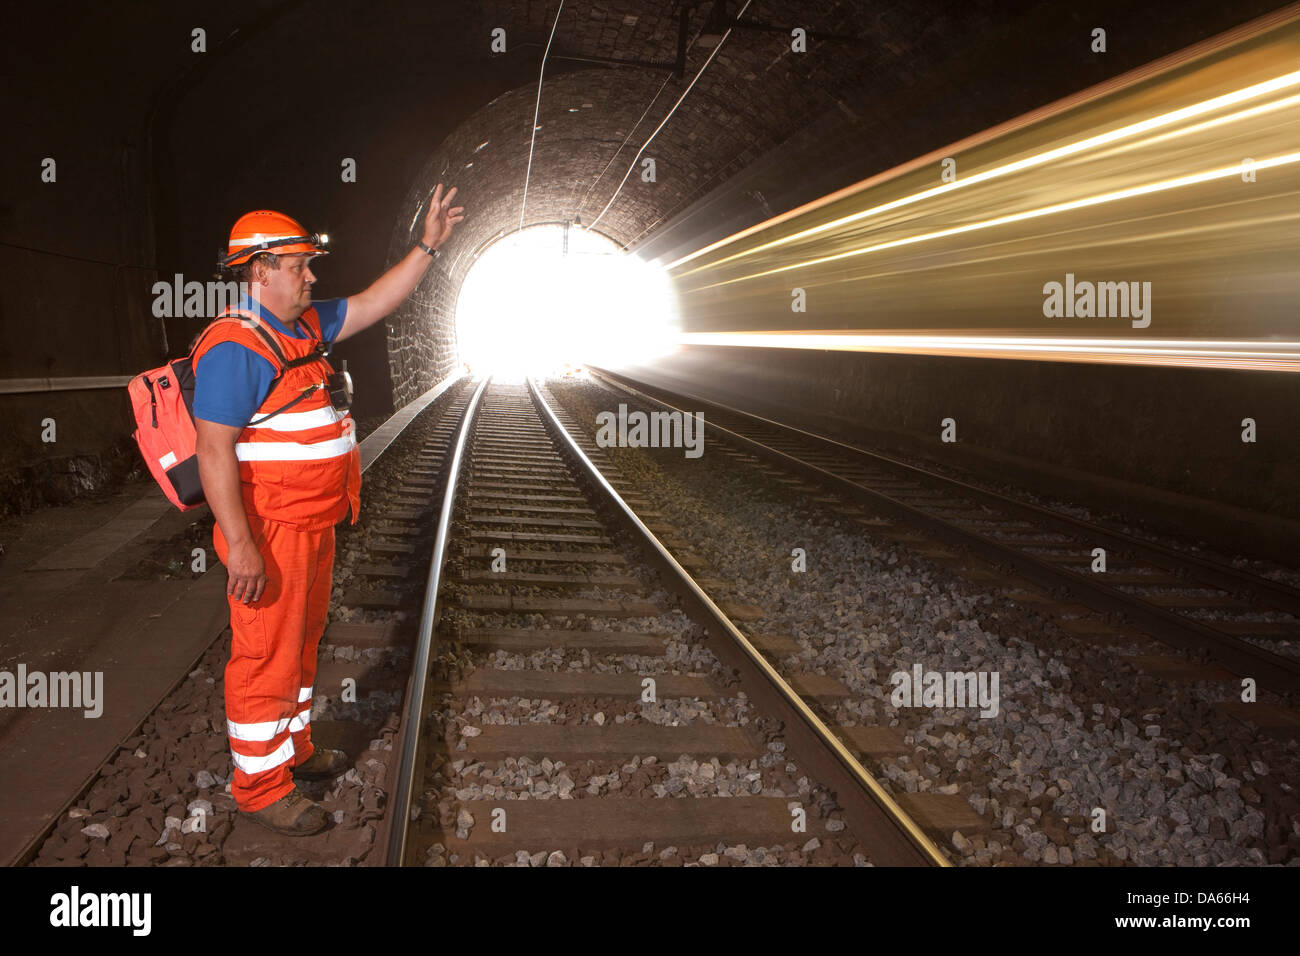 Juez de línea, túneles, carreteras, ferrocarril, tren, ferrocarril, Lötschberg, BLS, Suiza, Europa, seguridad, en el Oberland Bernés, faros Foto de stock